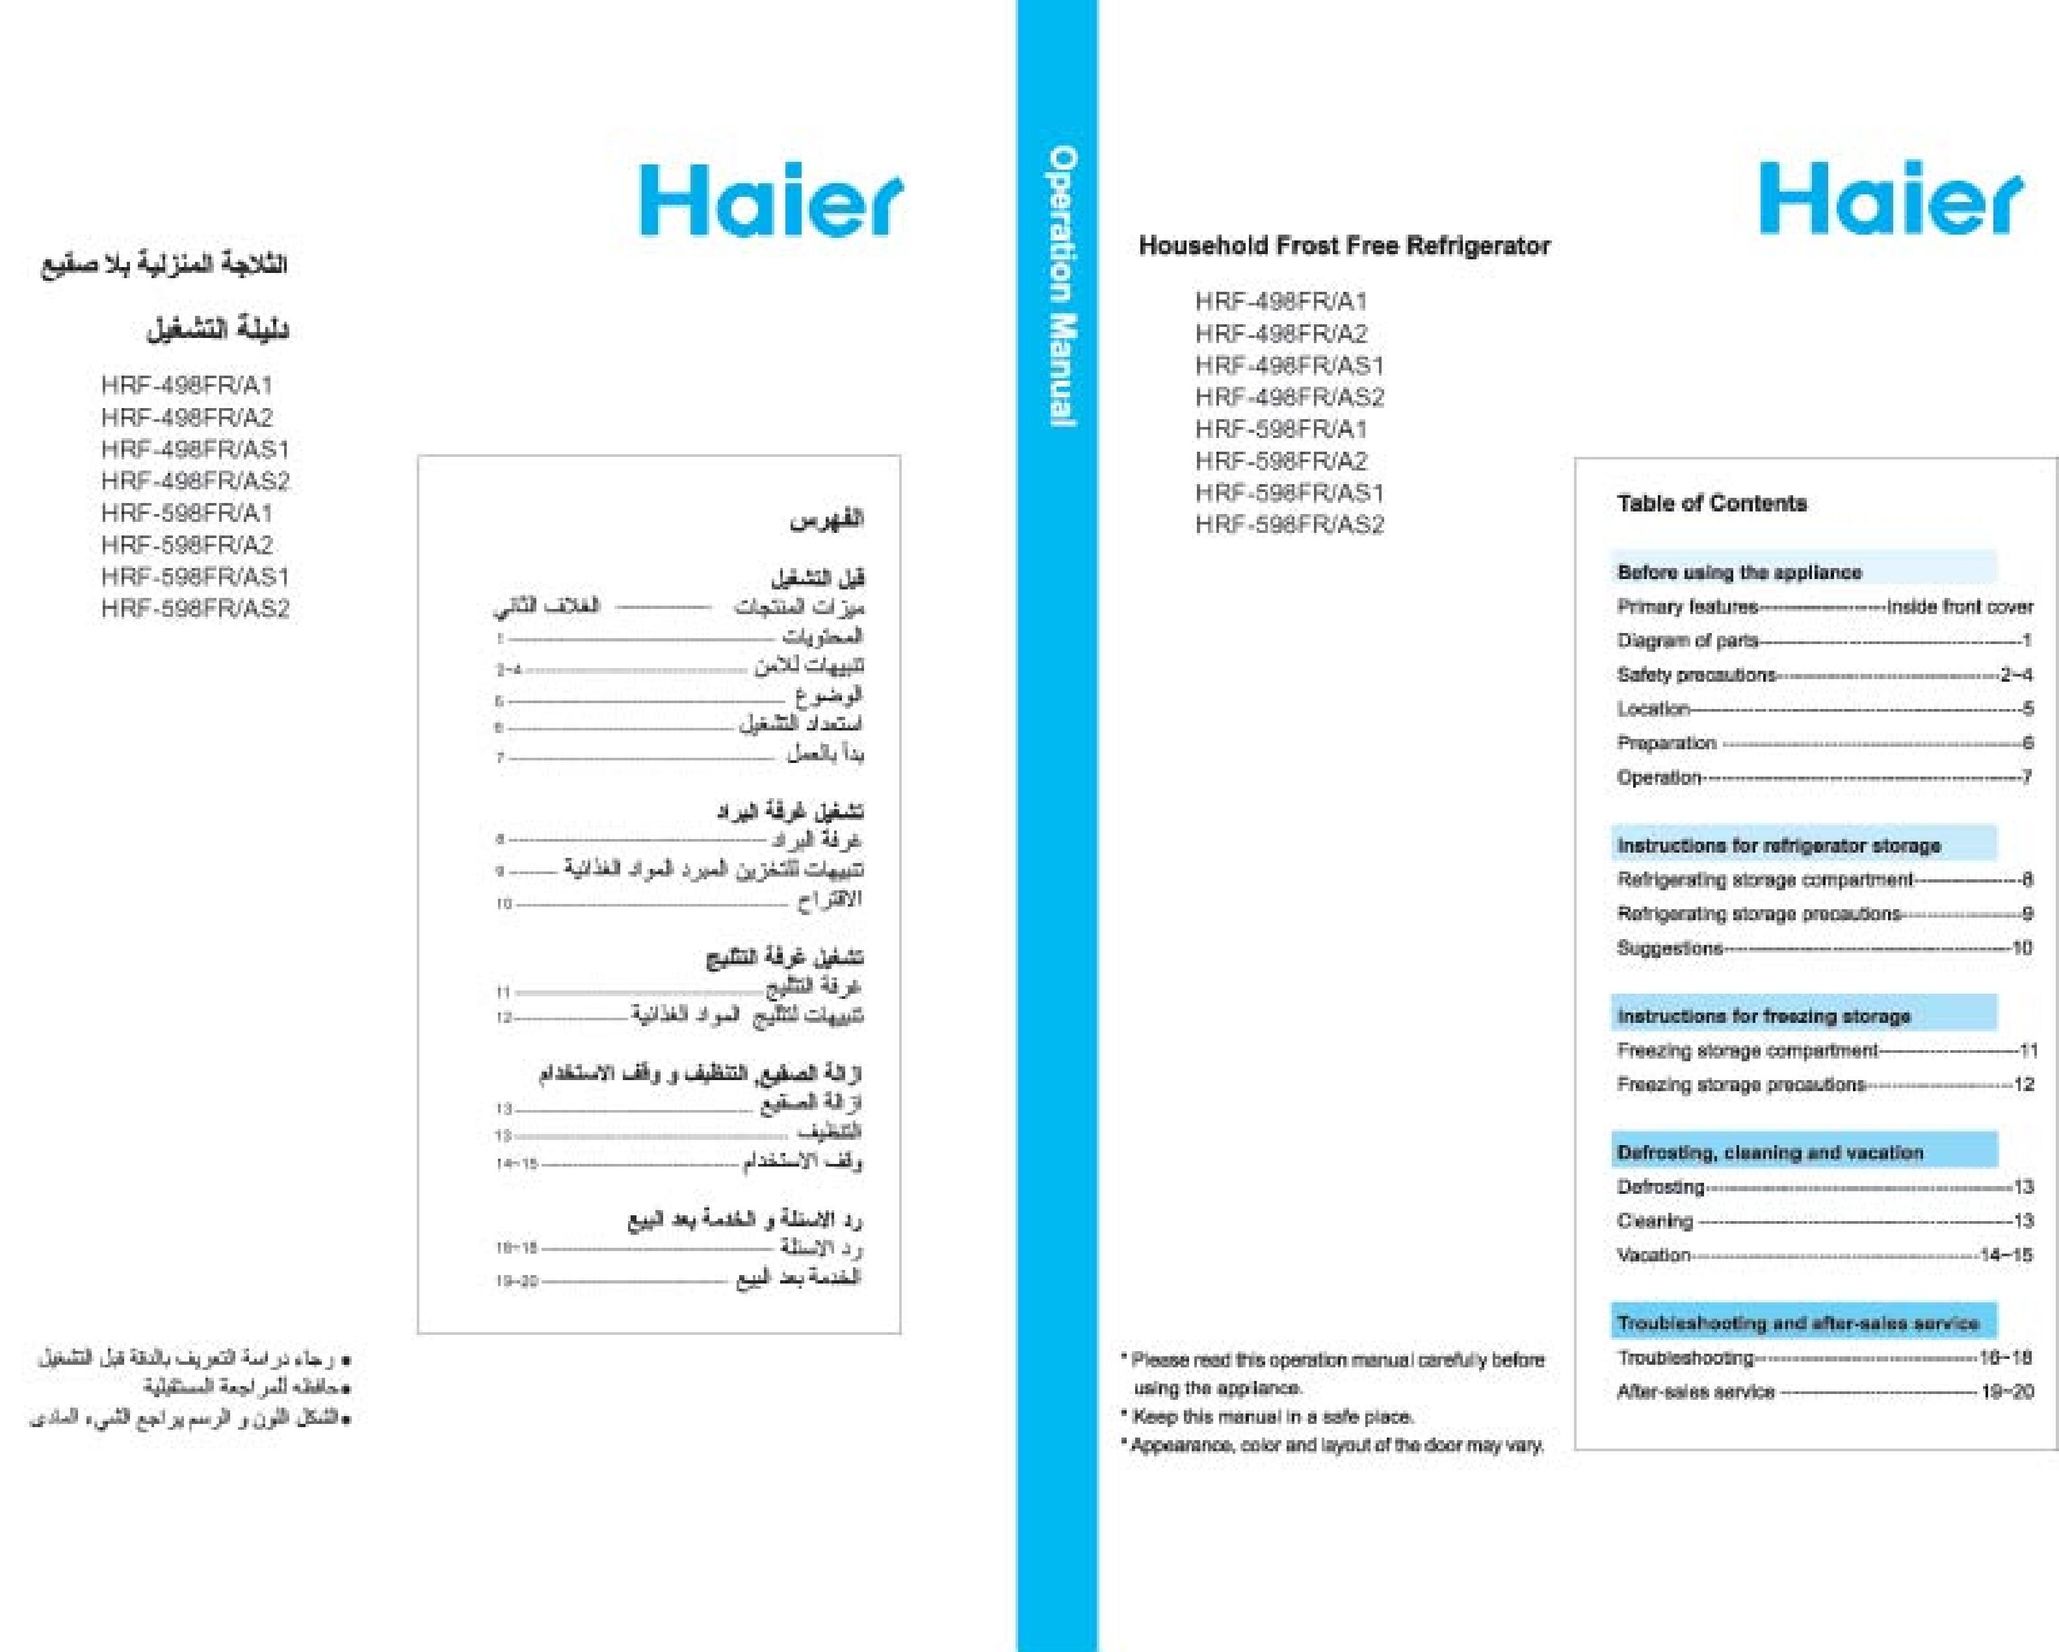 Haier HRF-498FR/AS2 Saw User Manual